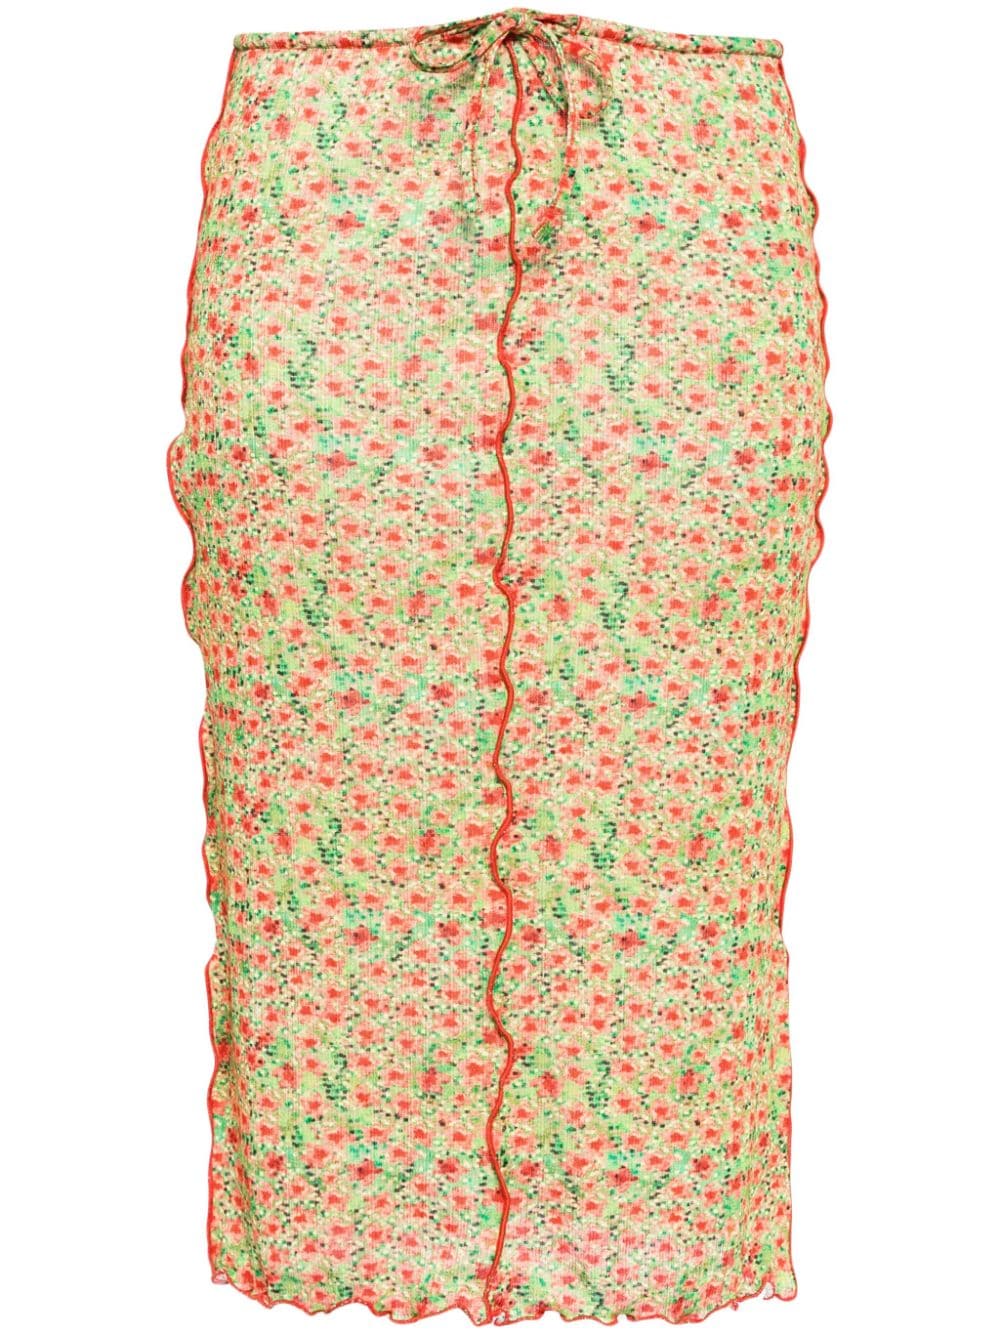 Joa floral ribbed skirt